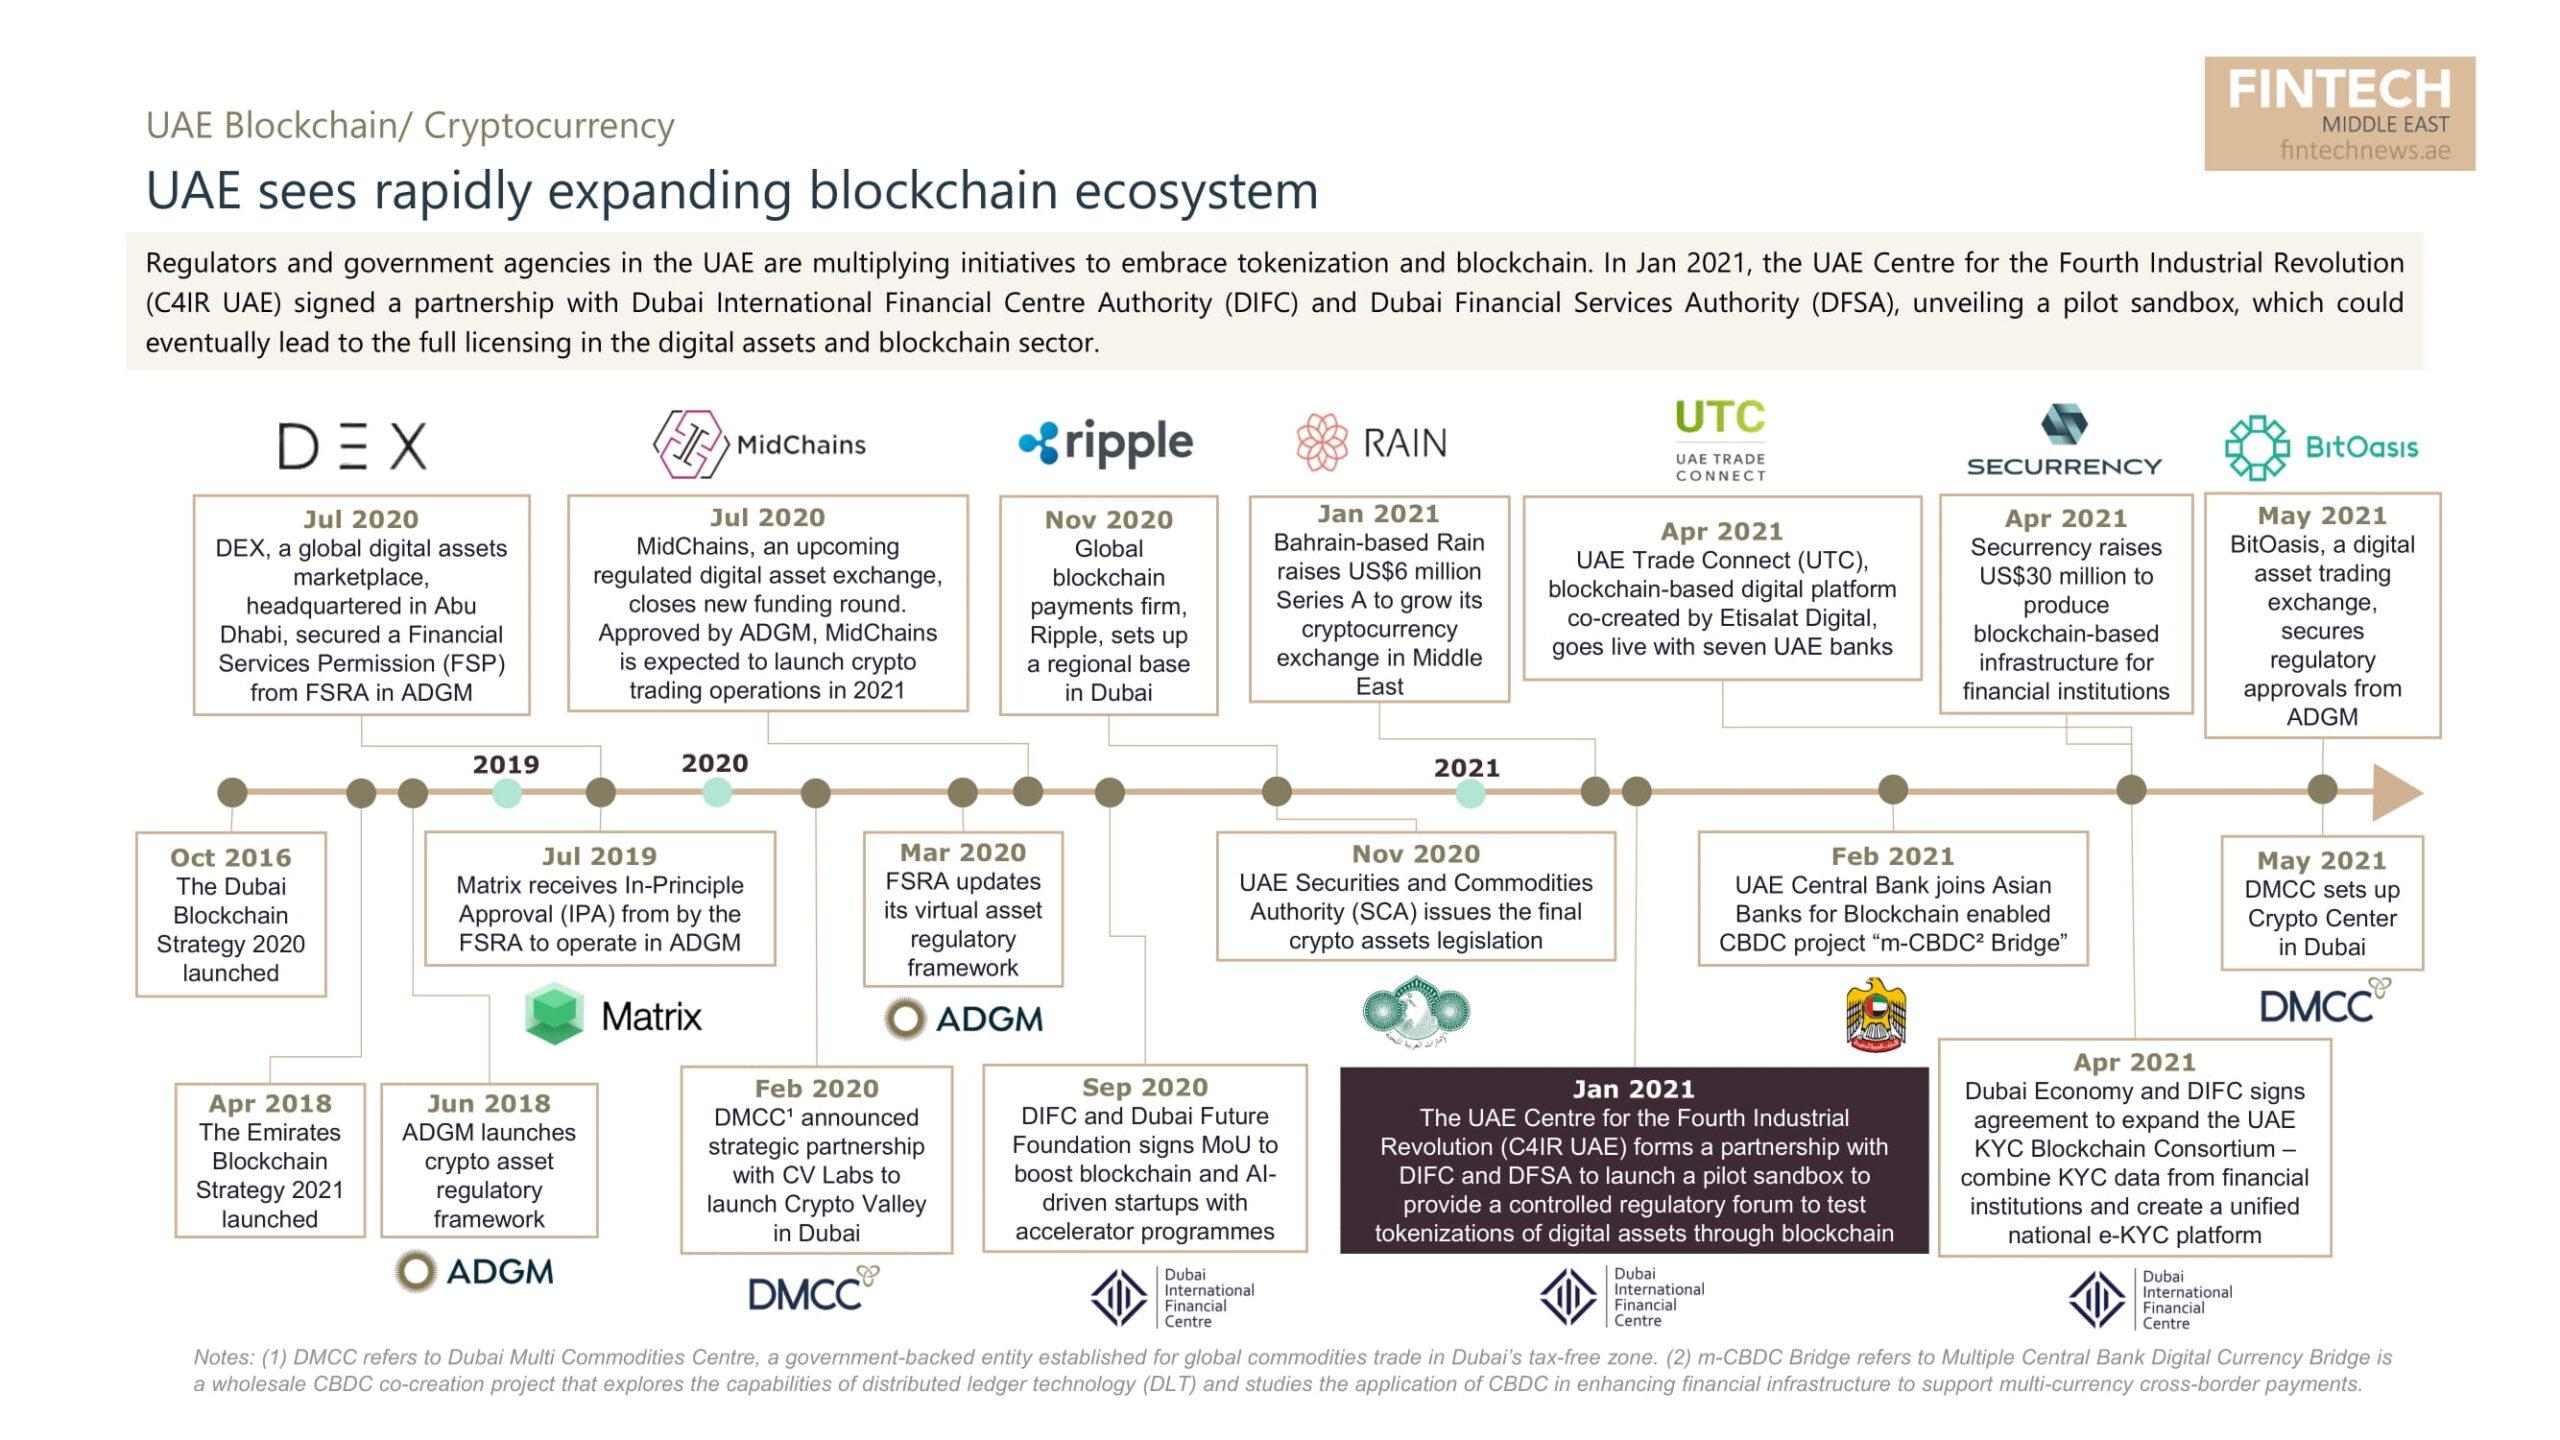 UAE sees rapidly expanding blockchain ecosystem